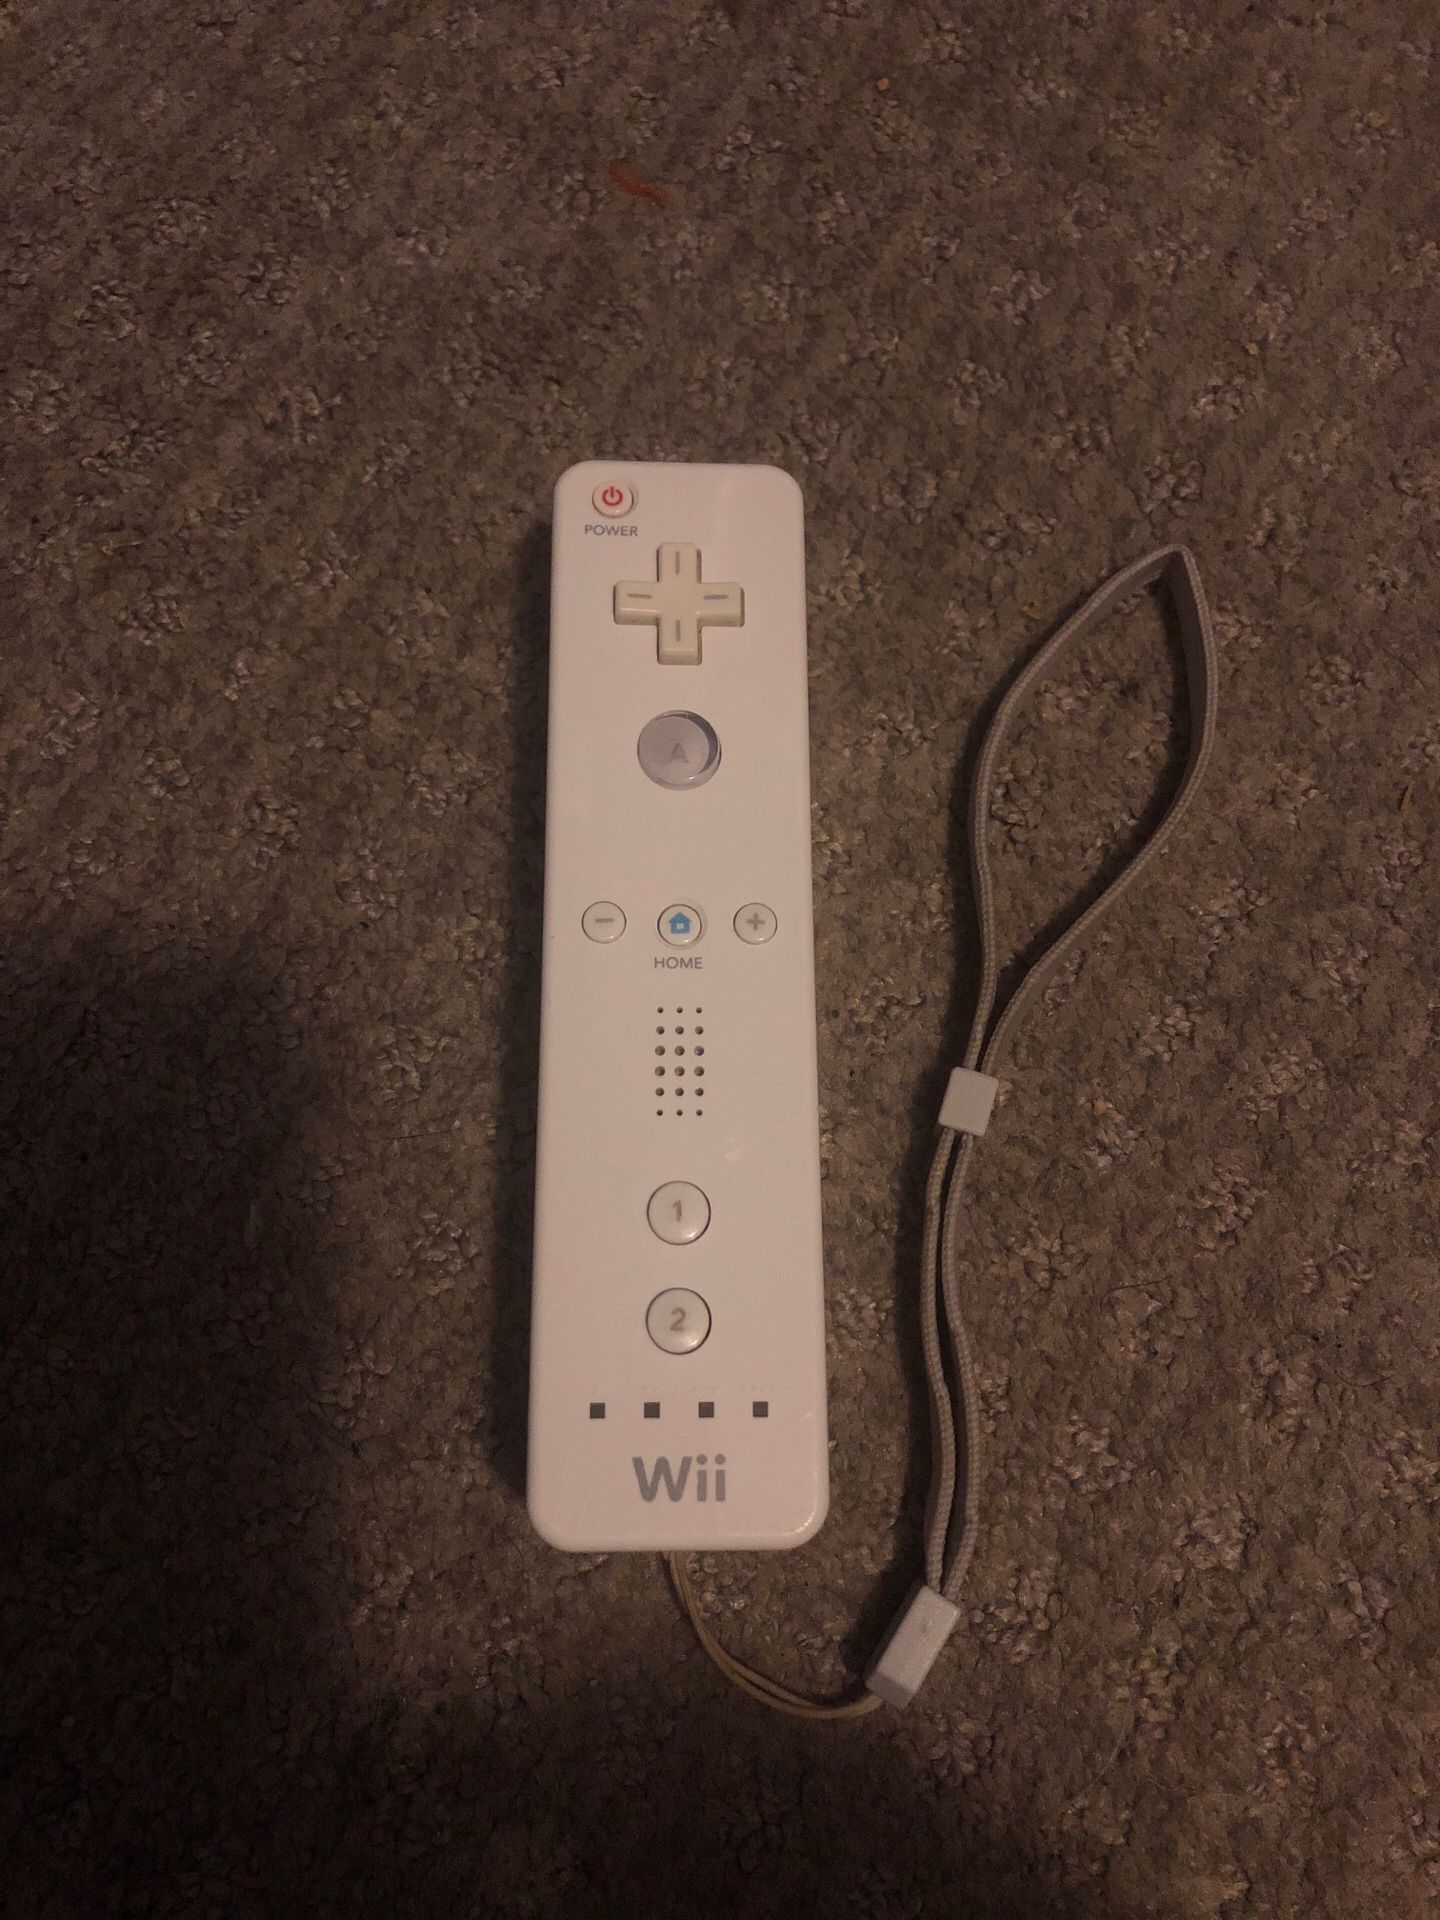 Nintendo Wii Remote controller